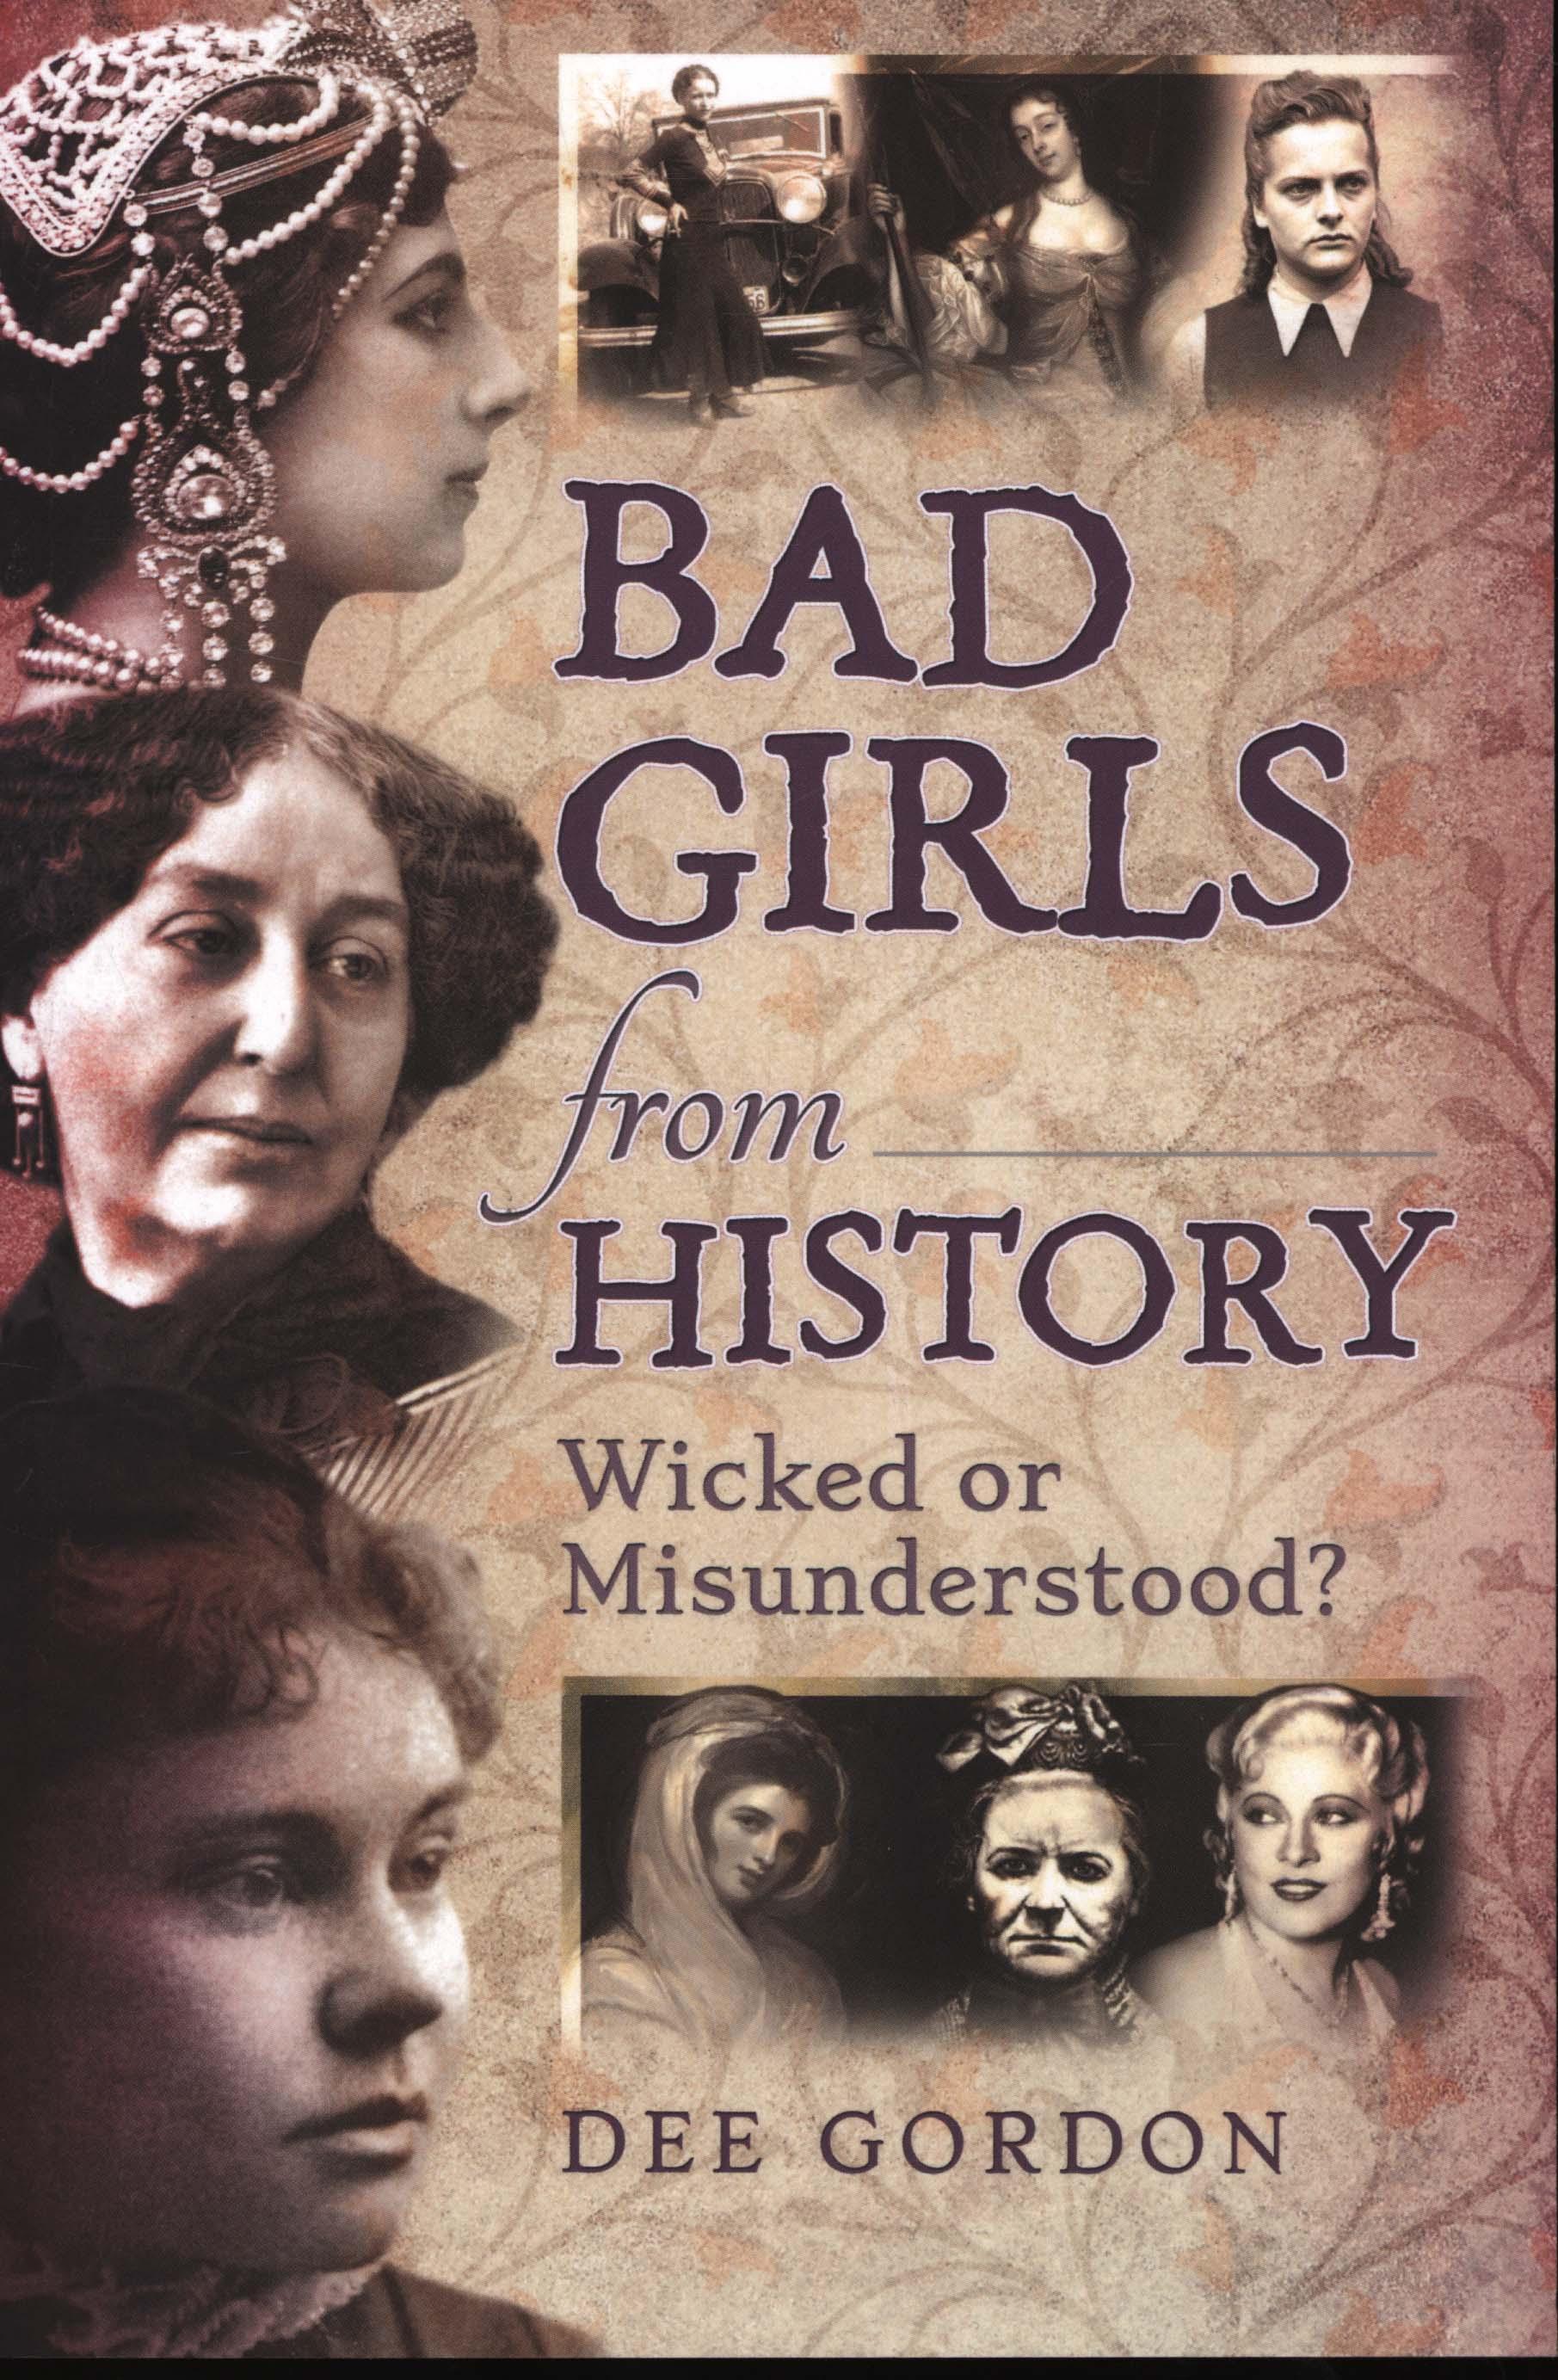 Bad Girls from History - Dee Gordon